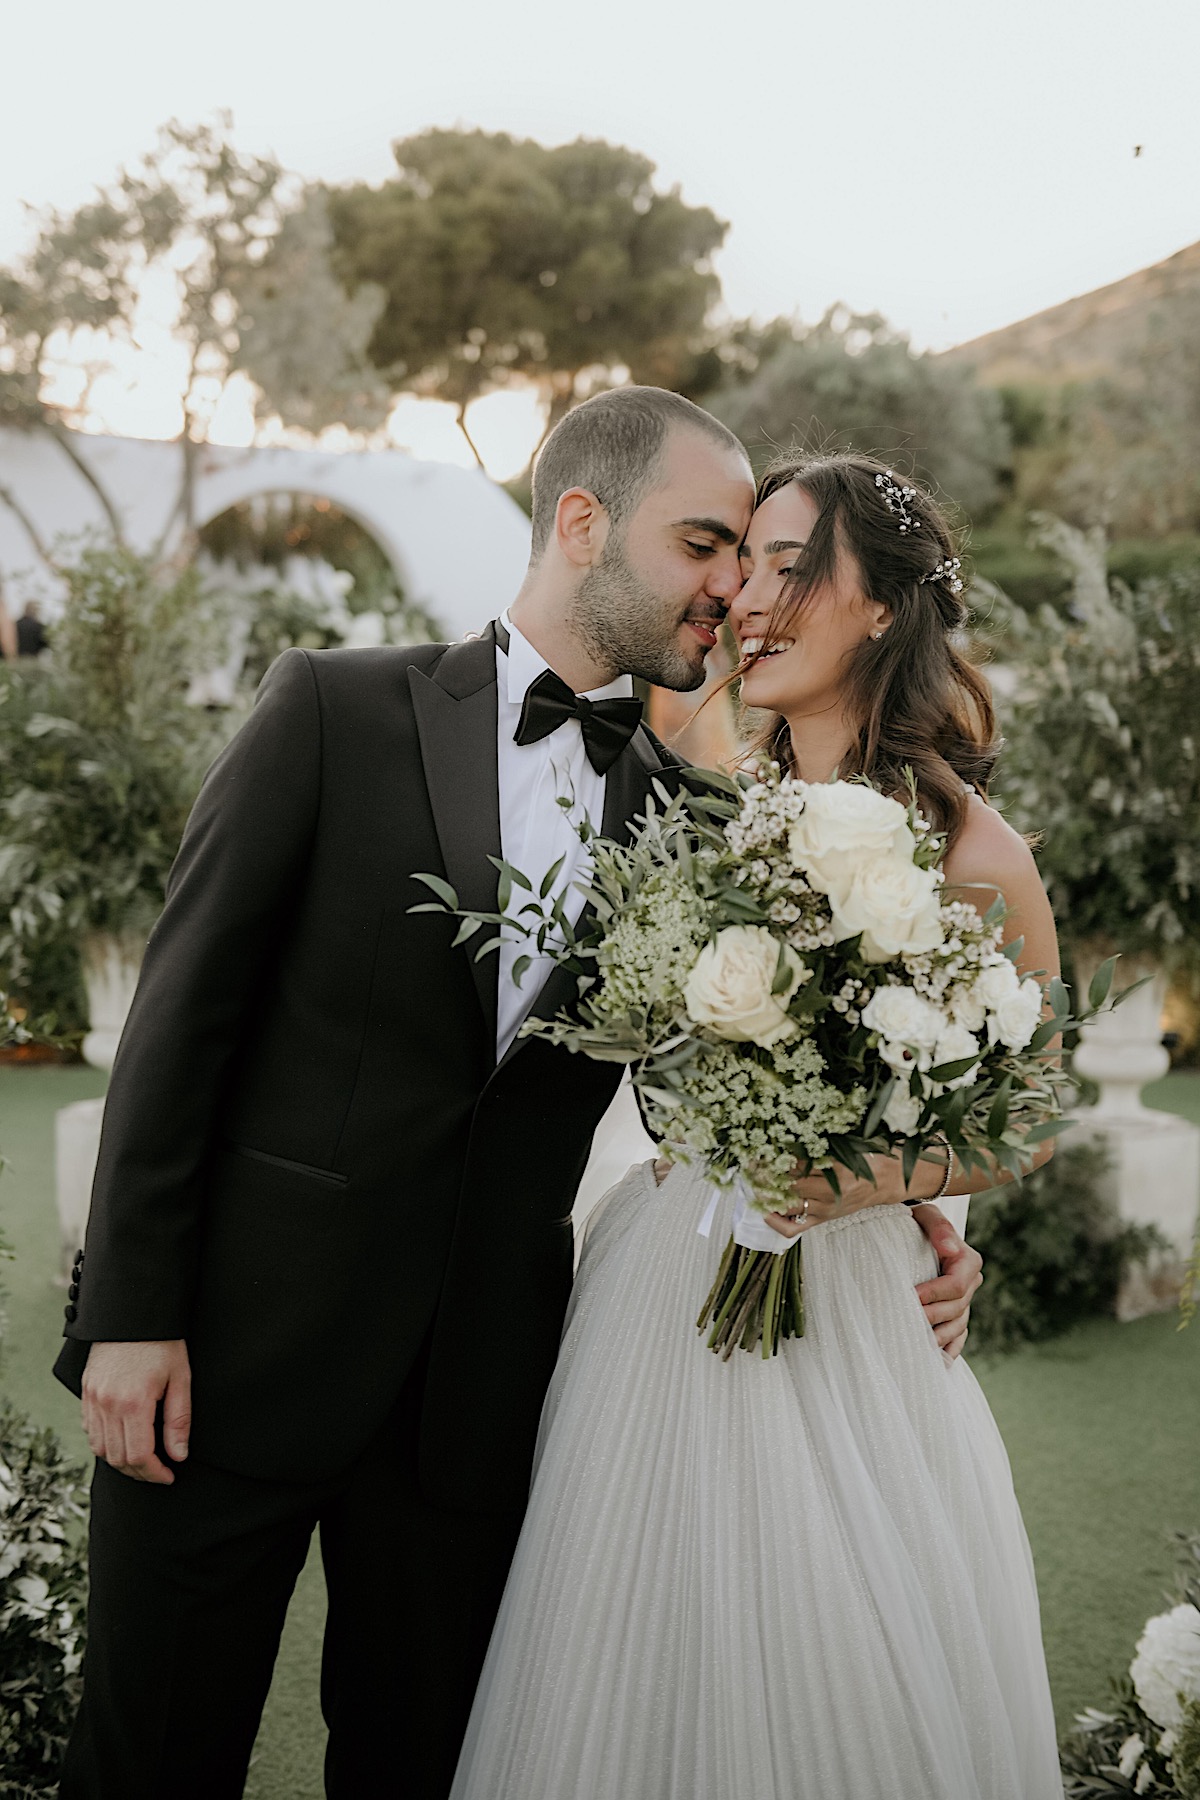 Olives & vows: embracing eternal love under the Mediterranean sun